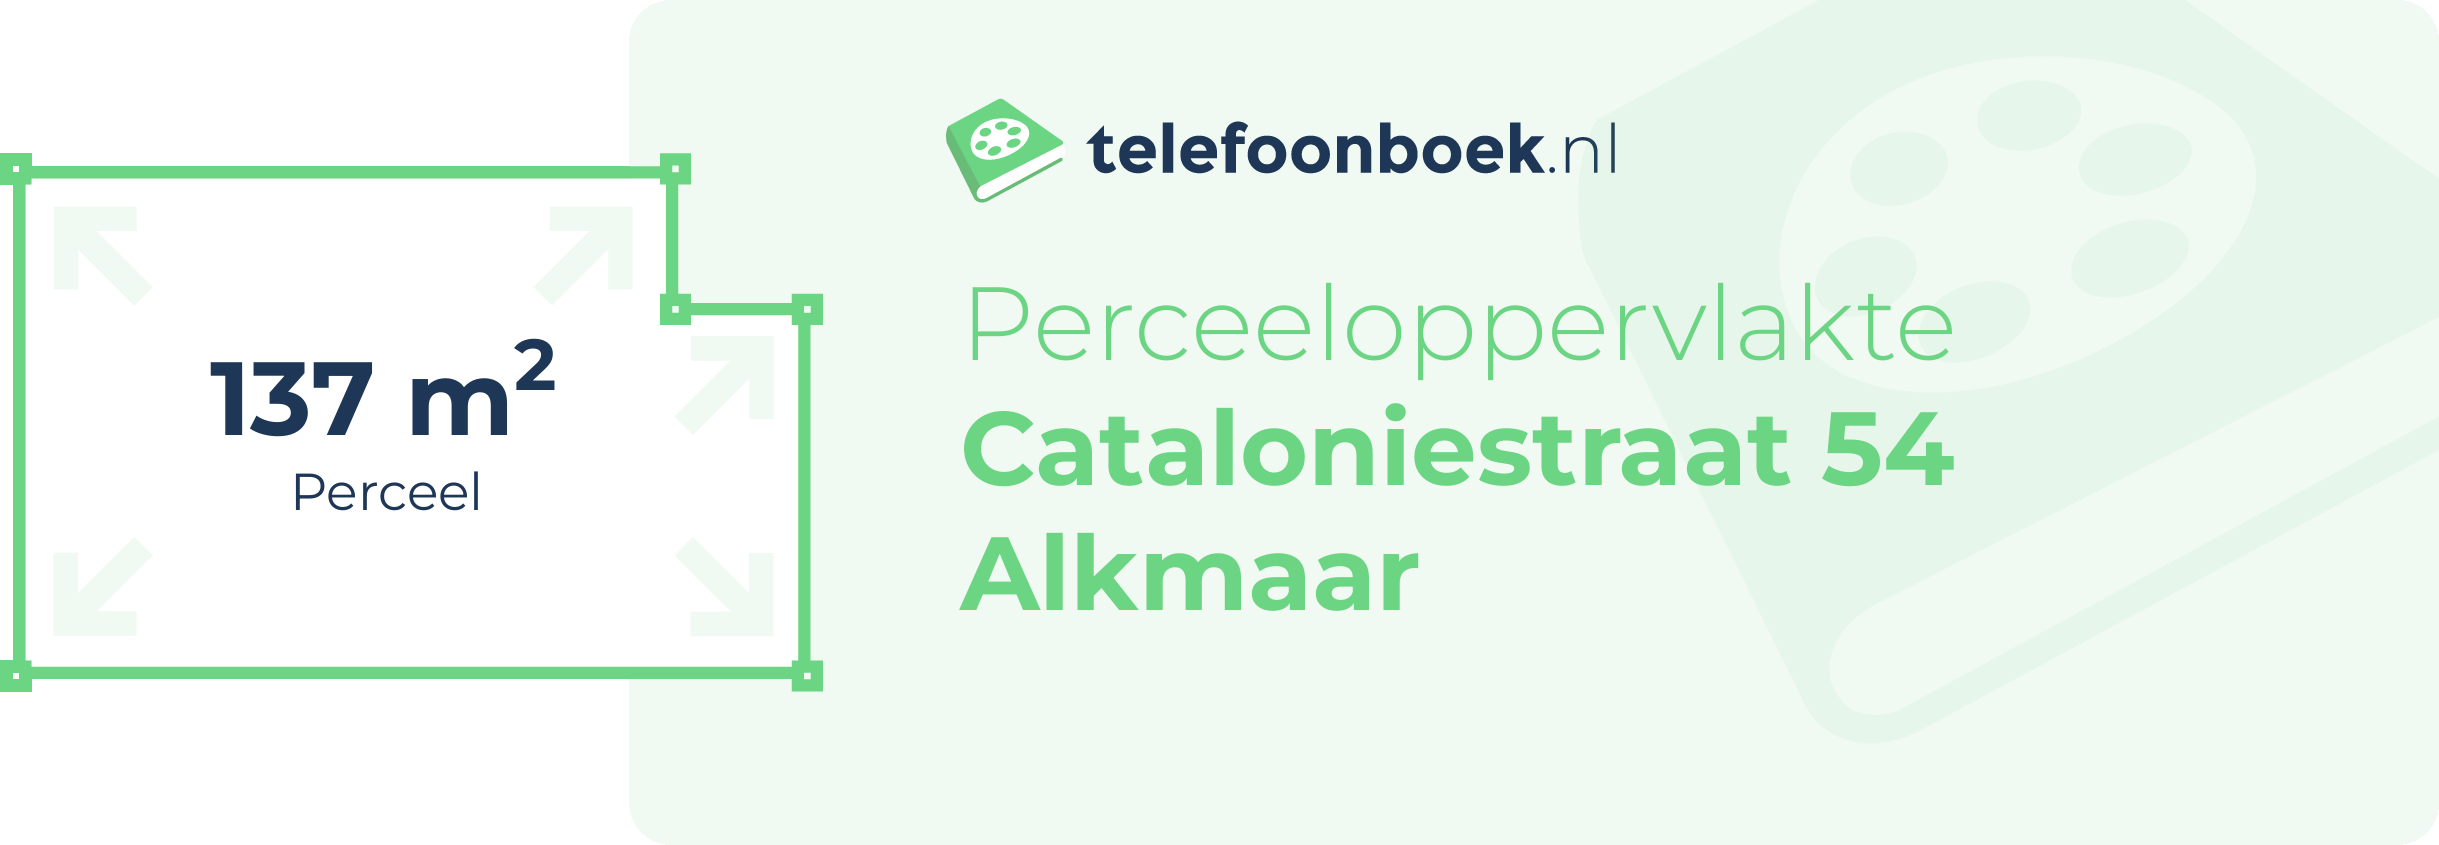 Perceeloppervlakte Cataloniestraat 54 Alkmaar